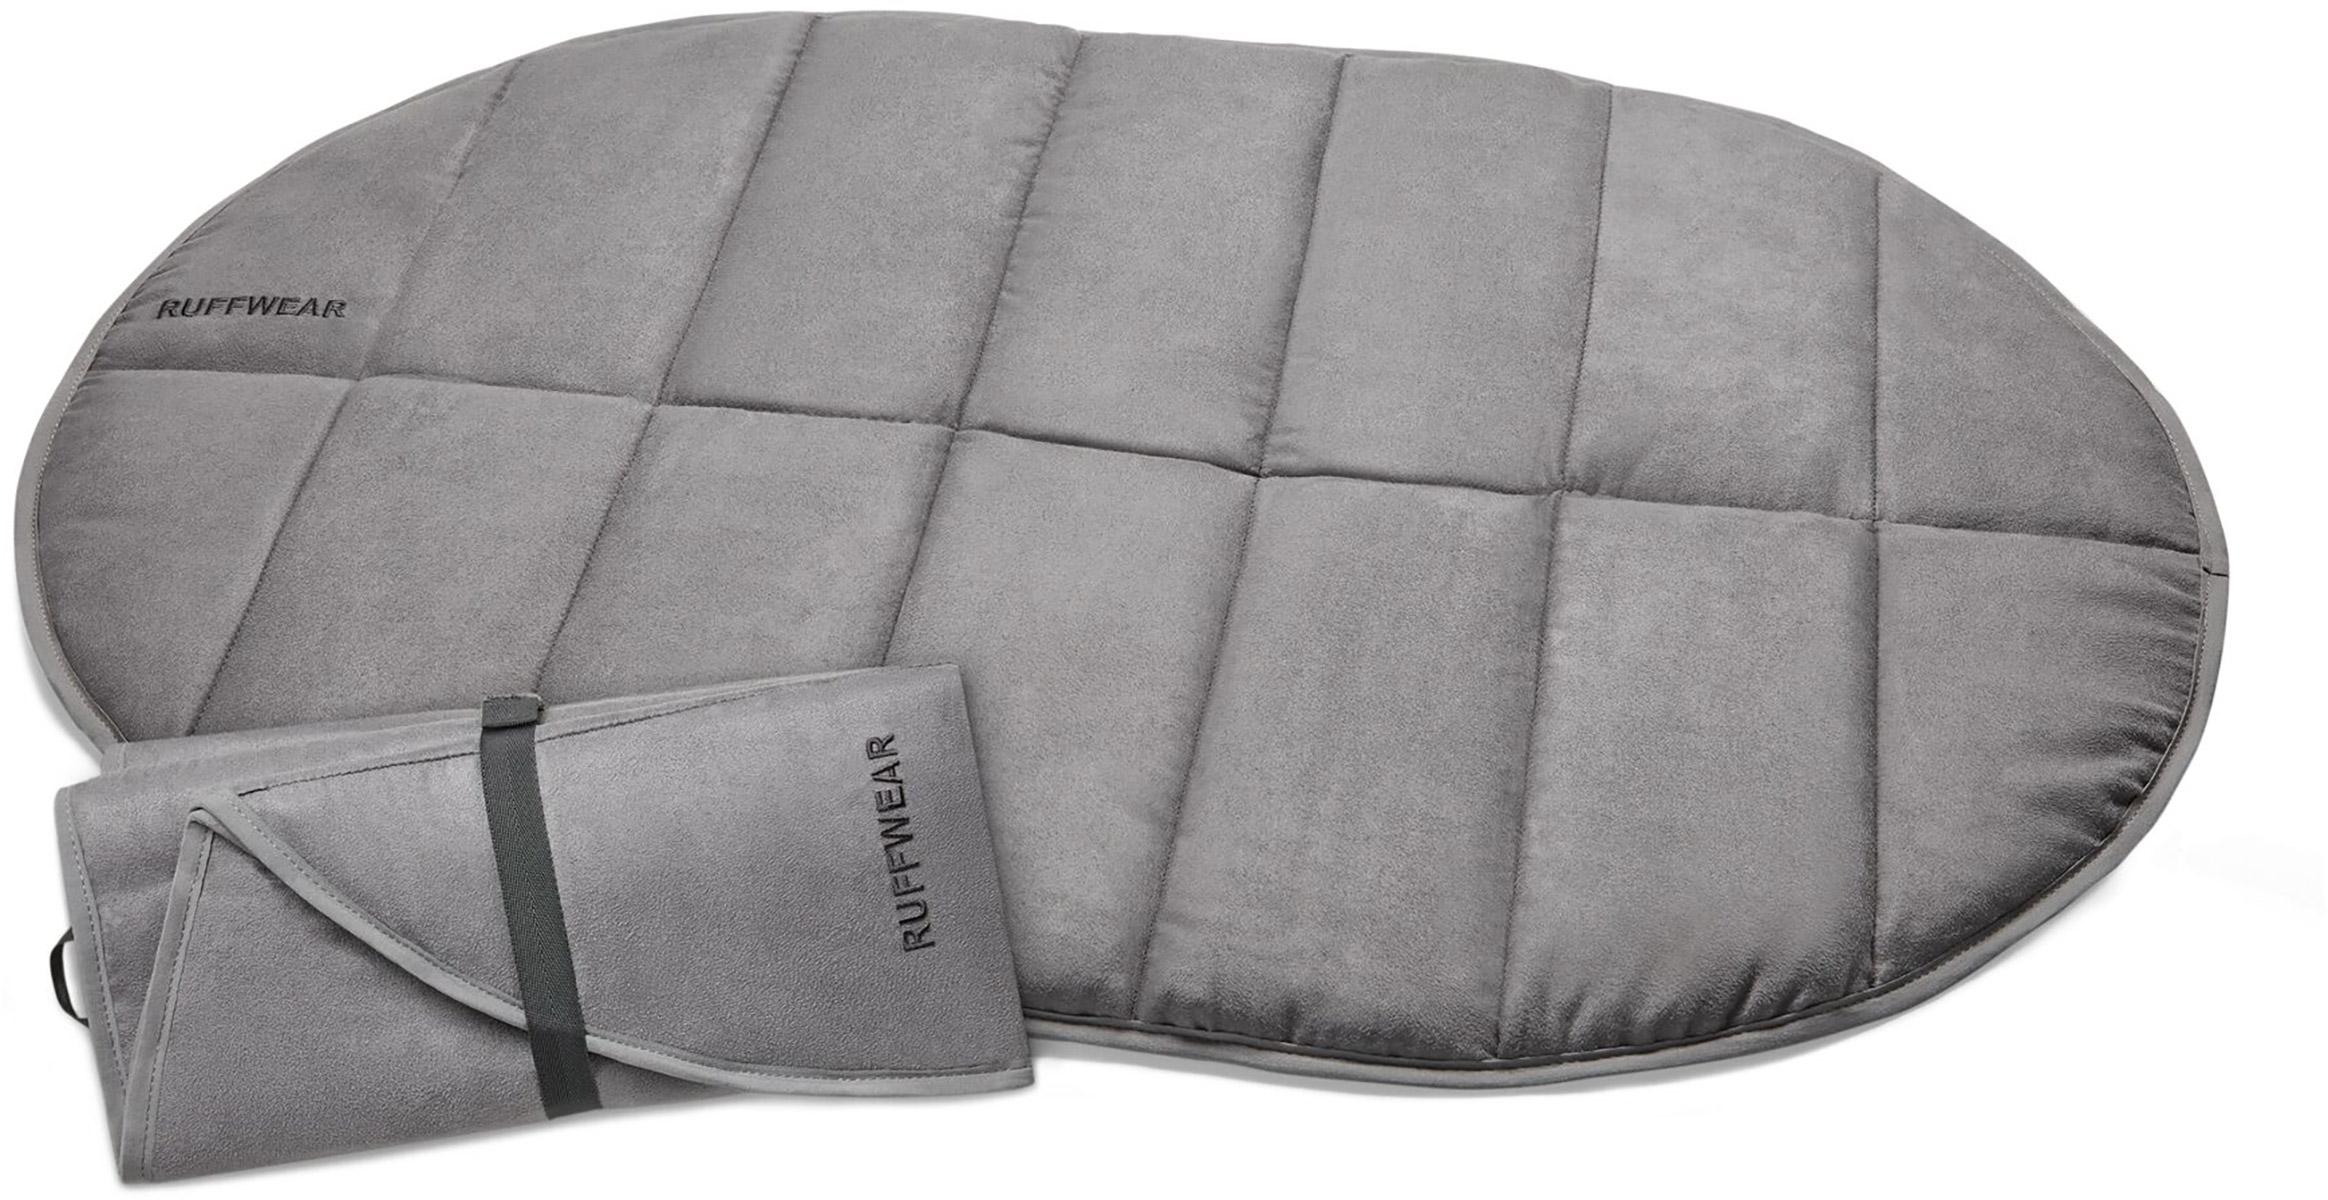 Ruffwear Highlands Dog Pad Bed (large) - Cloudburst Grey